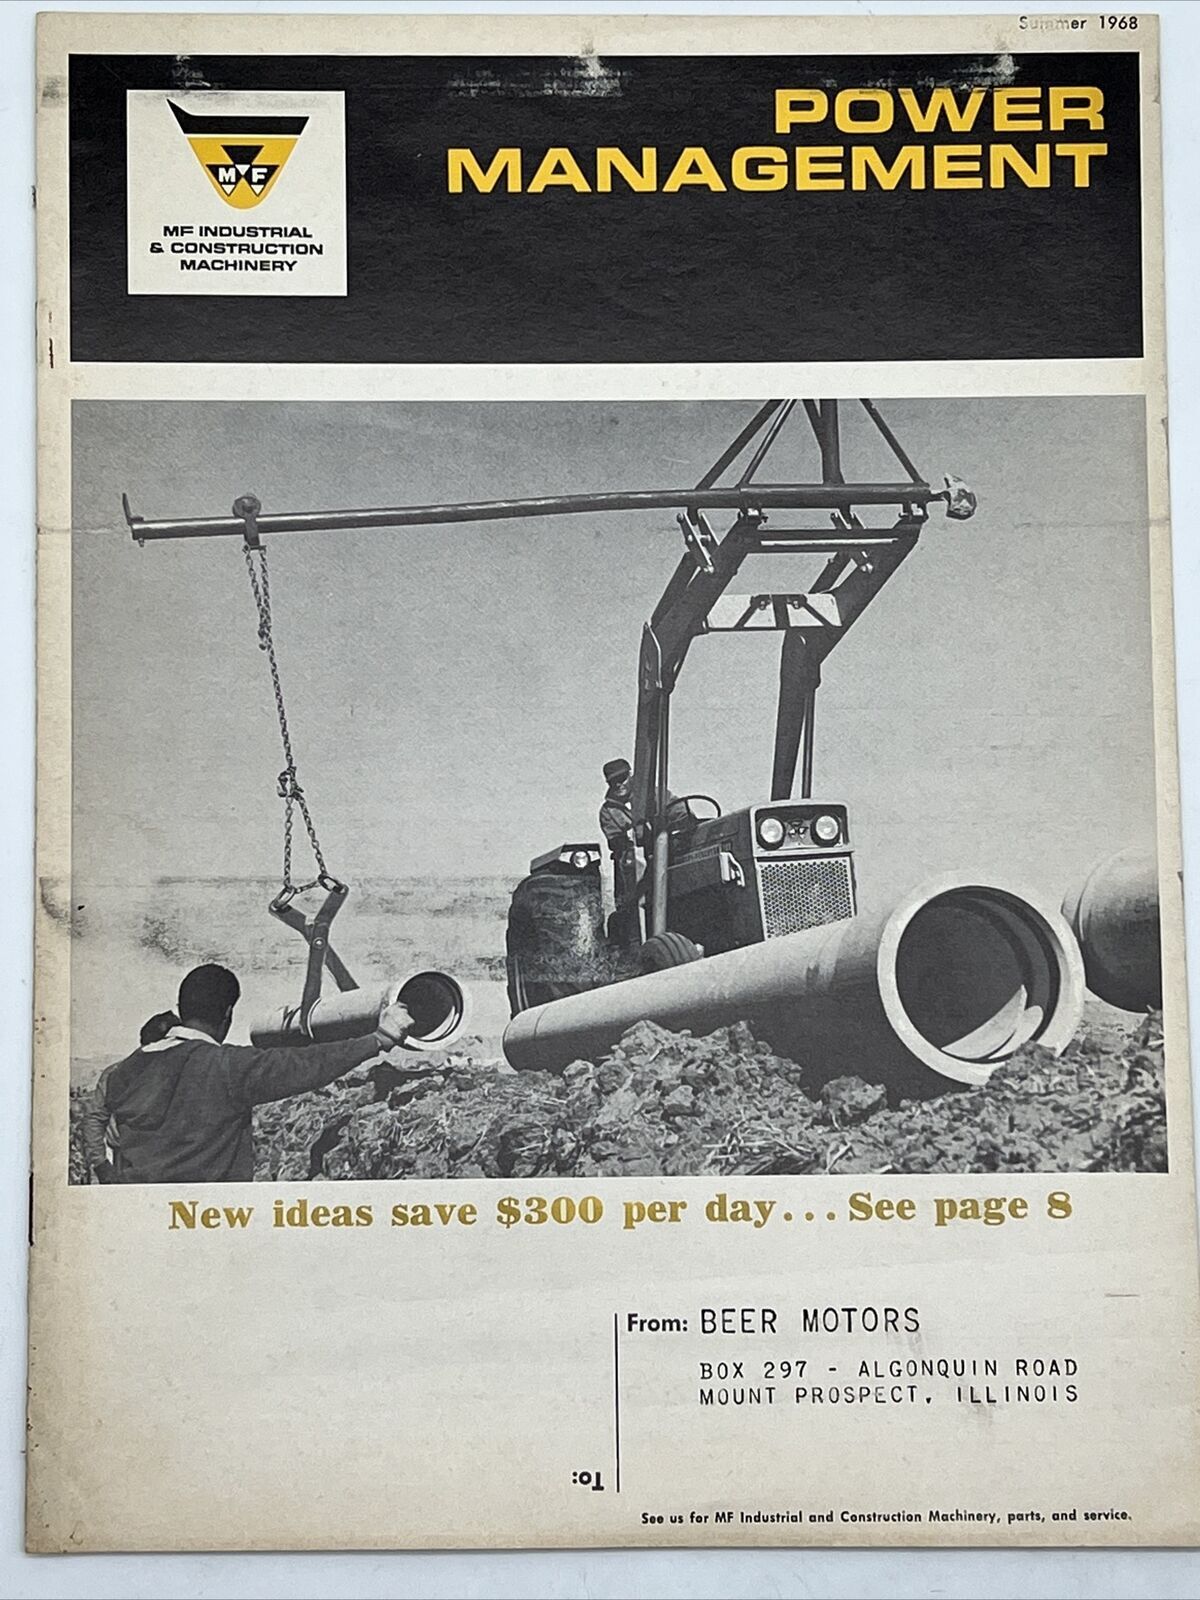 1968 MASSEY FERGUSON INDUSTRIAL CONSTRUCTION MACHINERY POWER MANAGEMENT MAGAZINE